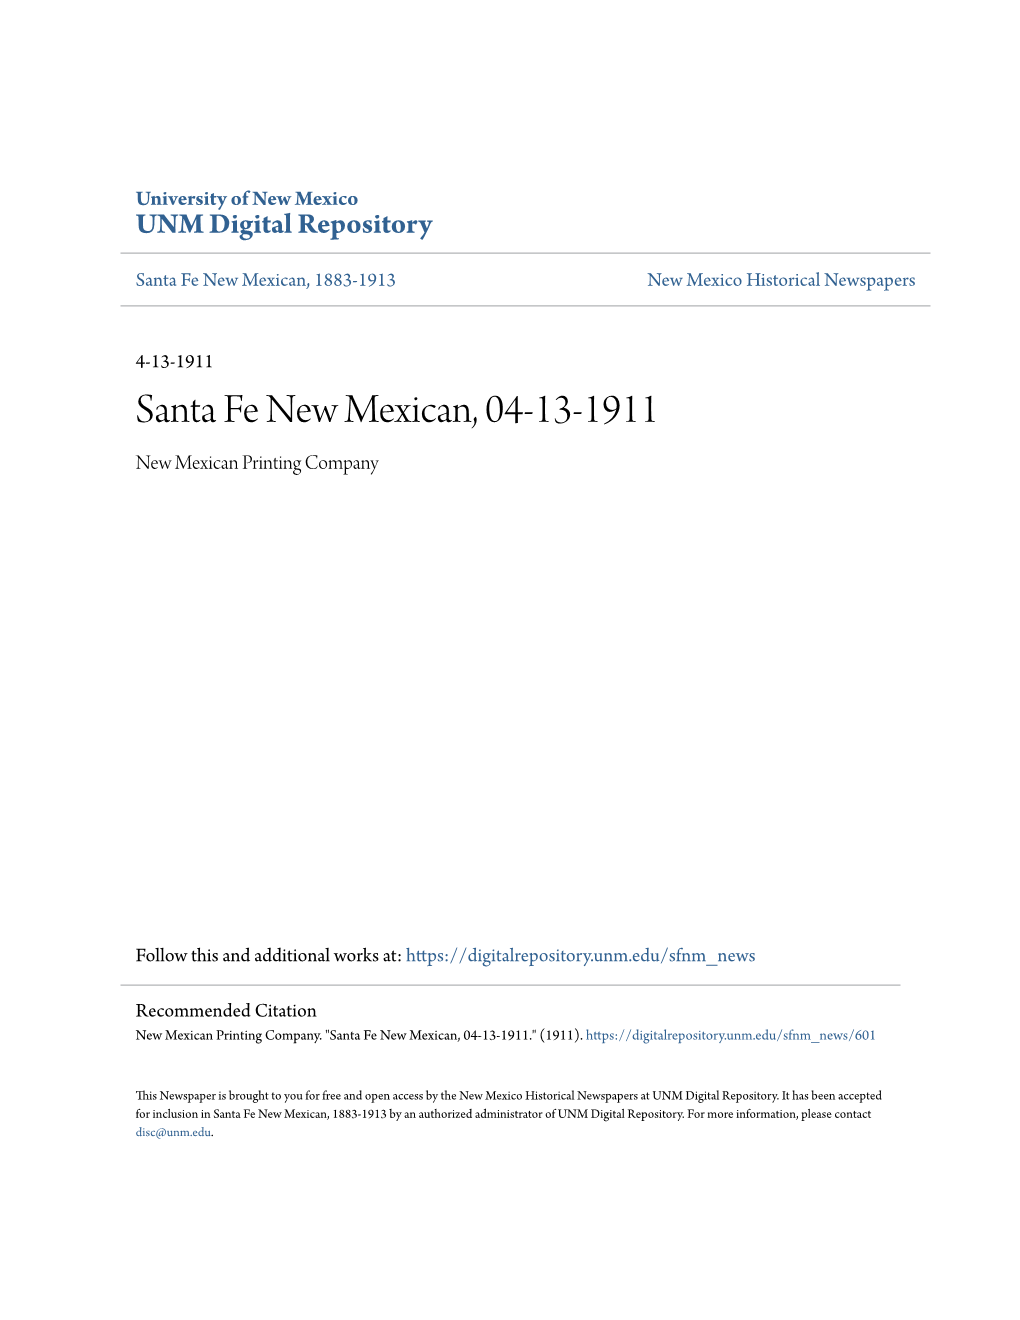 Santa Fe New Mexican, 04-13-1911 New Mexican Printing Company